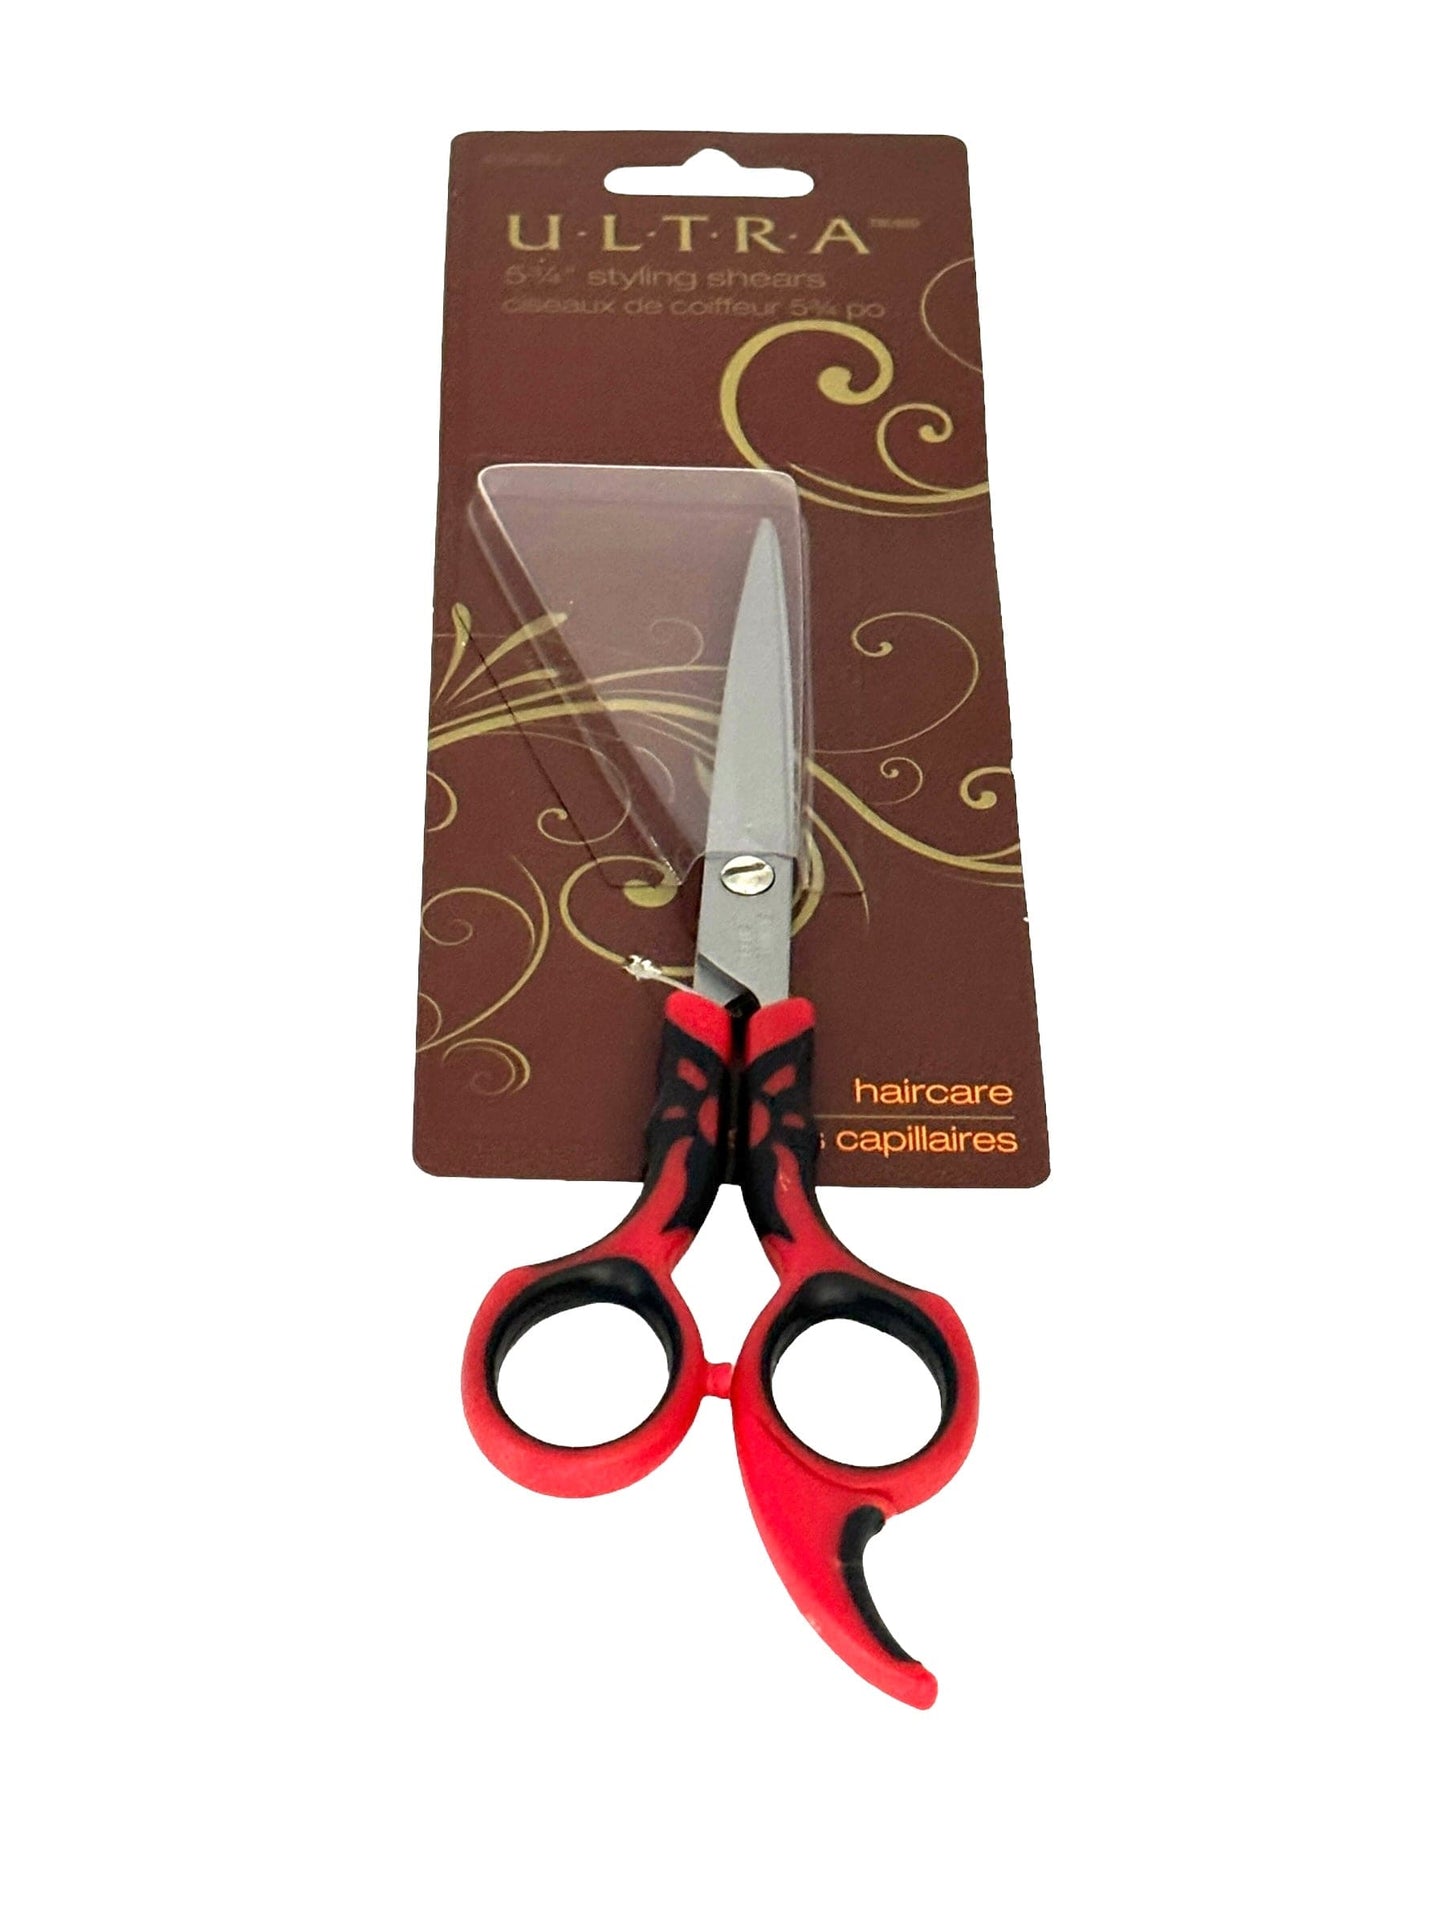 Hair Scissors Stainless Steel Styling Shears 5 3/4" Hair Shears